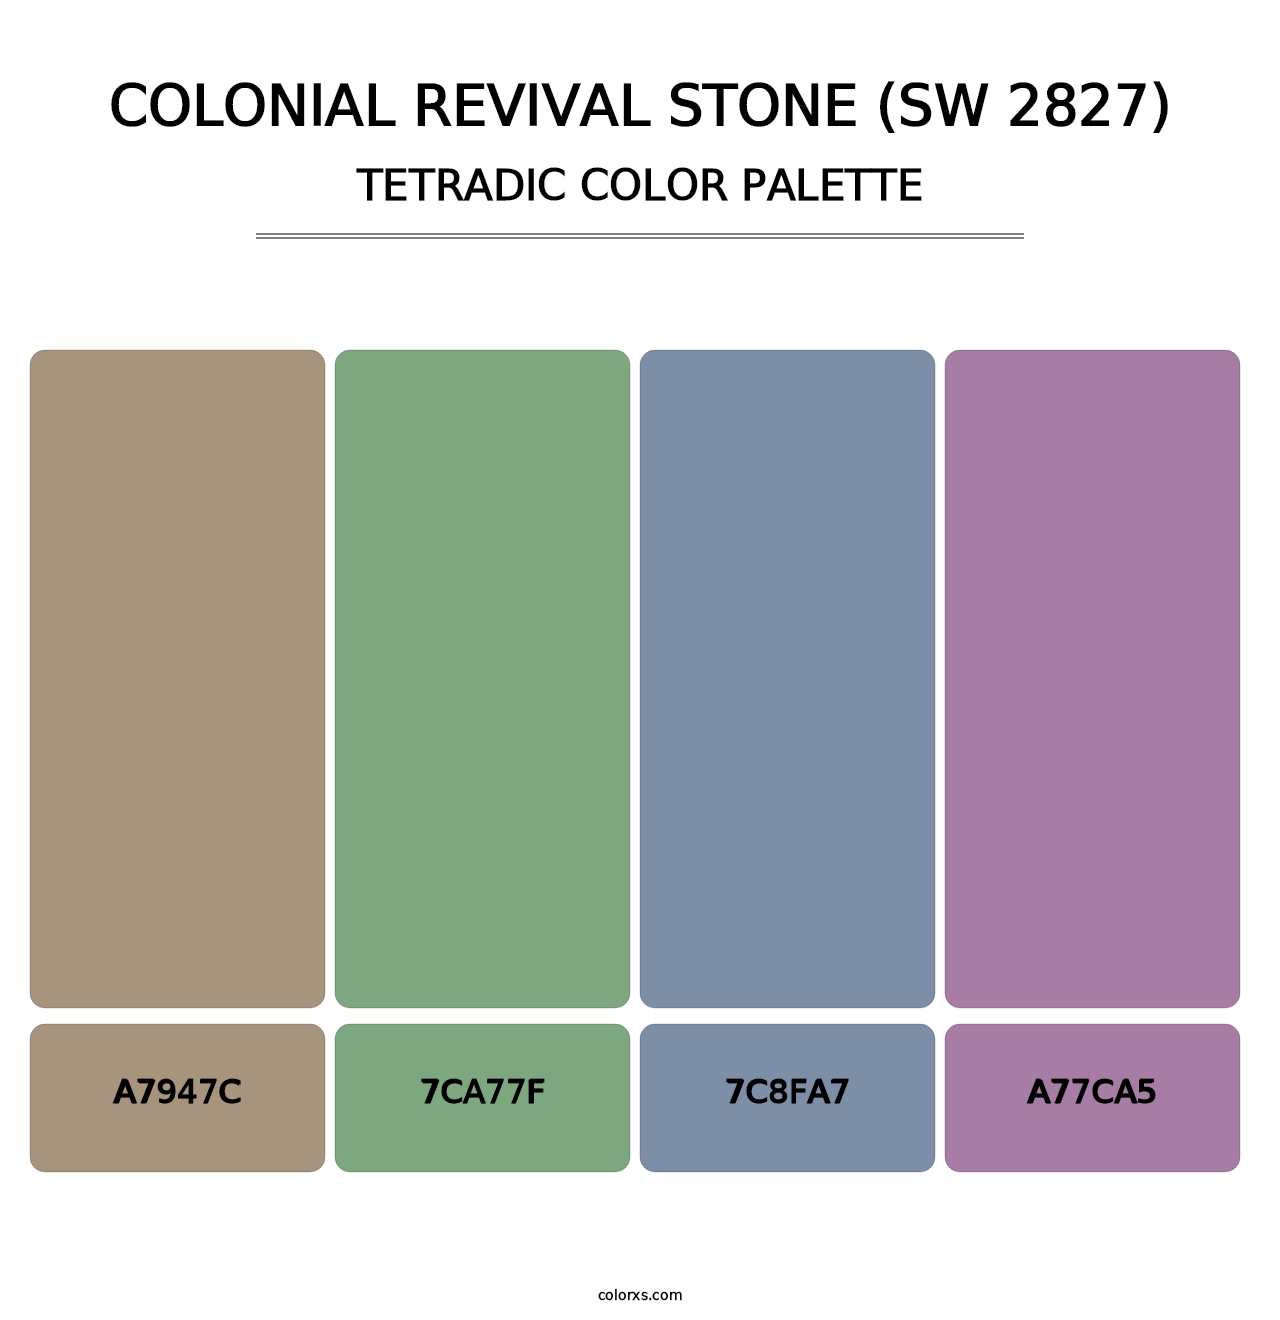 Colonial Revival Stone (SW 2827) - Tetradic Color Palette